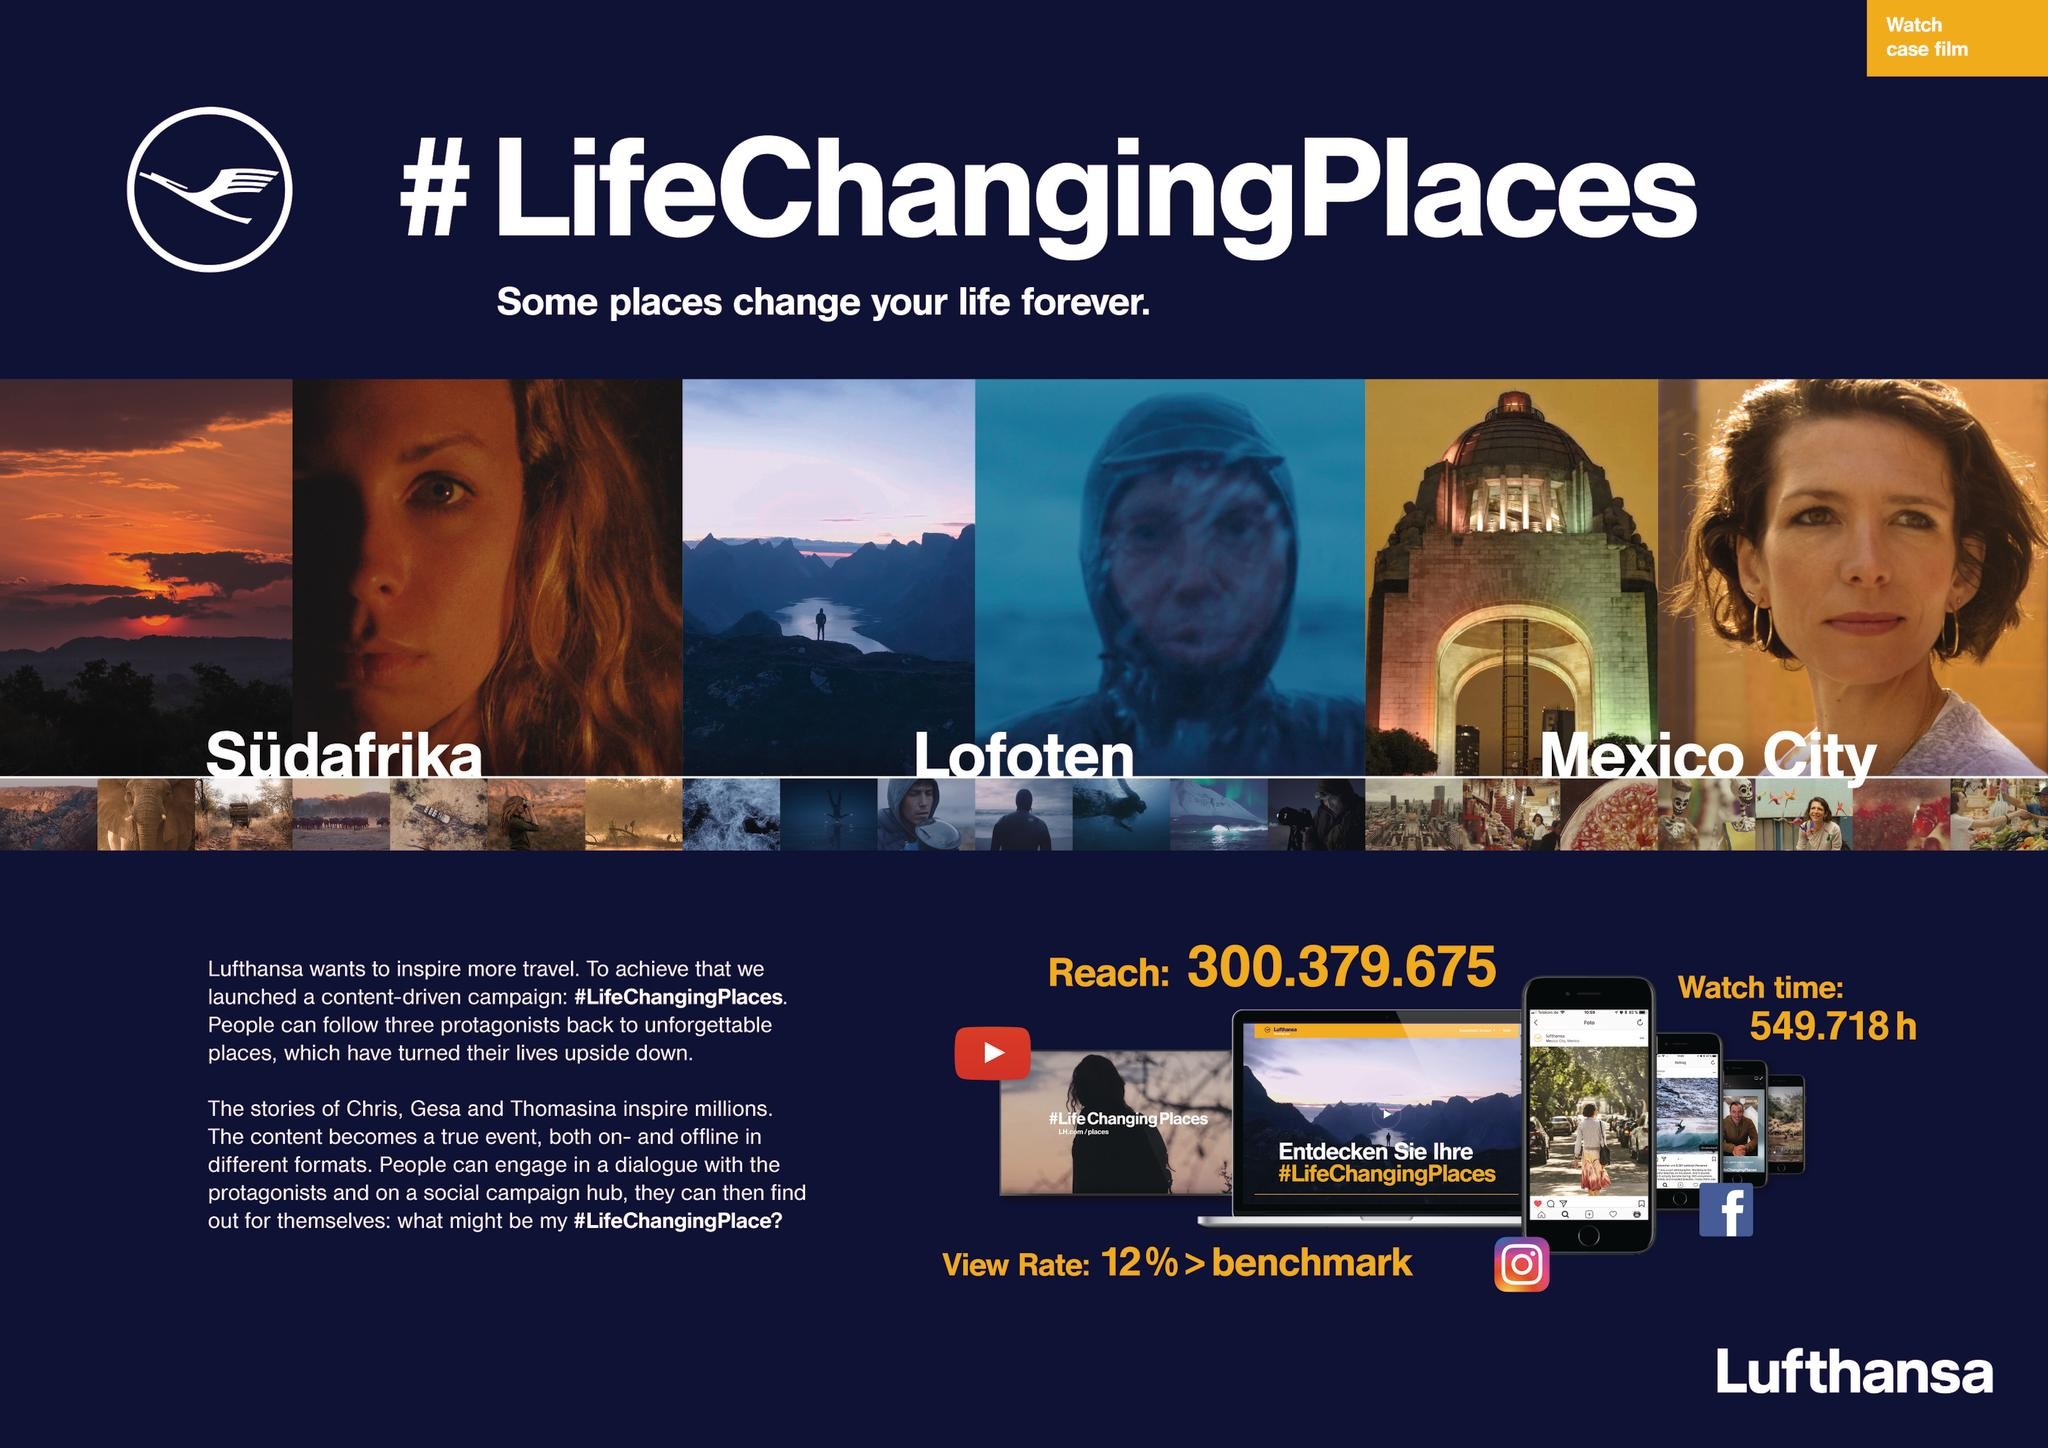 Lufthansa "#LifeChangingPlaces"